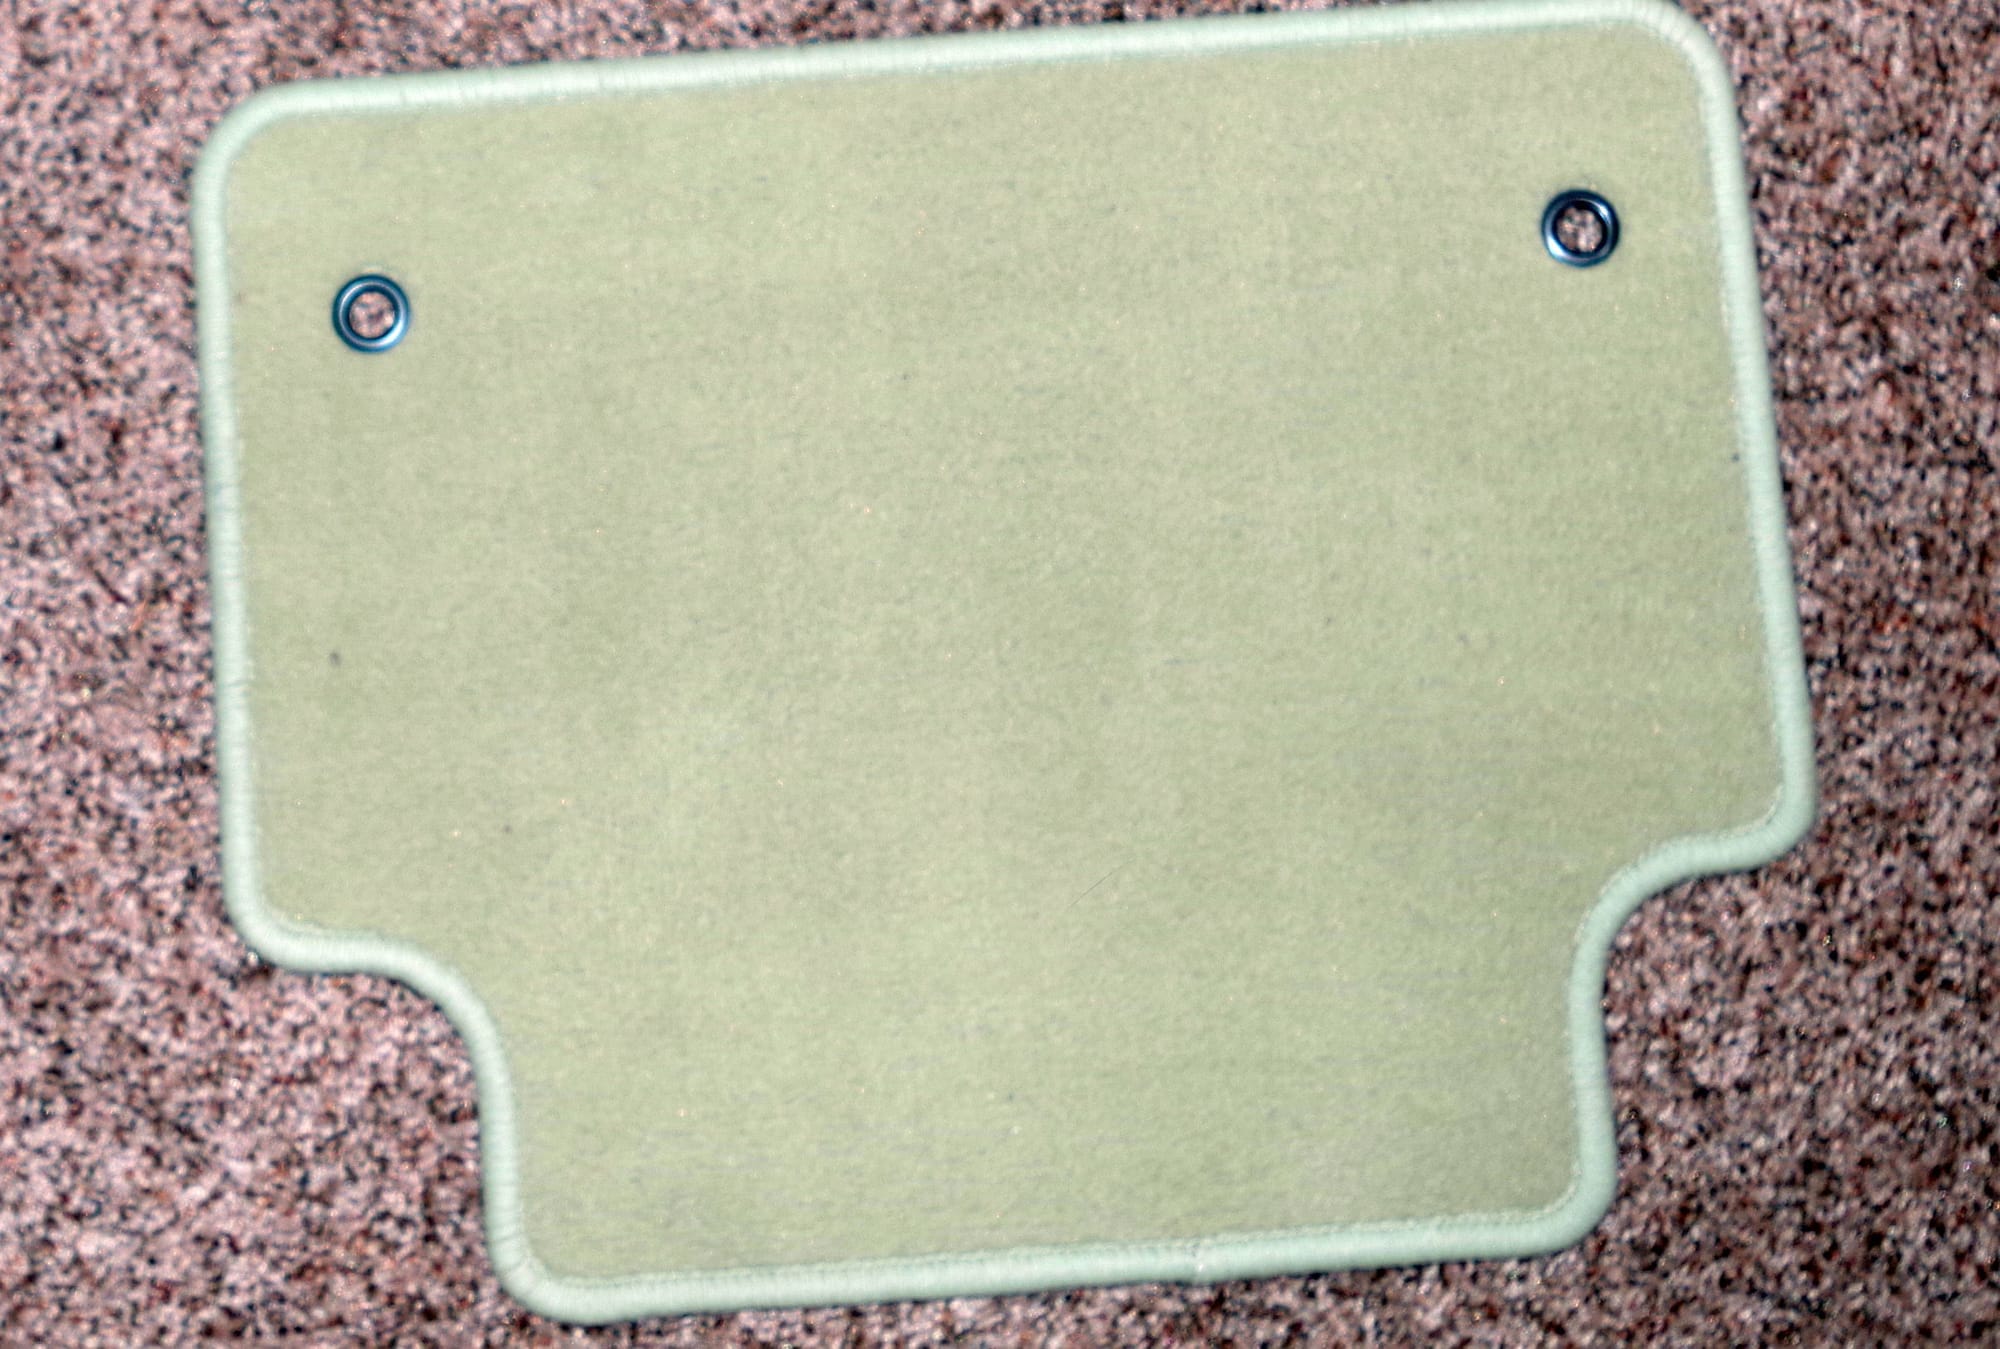 Interior/Upholstery - 2014 XF floormats - Used - 2014 Jaguar XF - Horseshoe Bend, ID 83629, United States